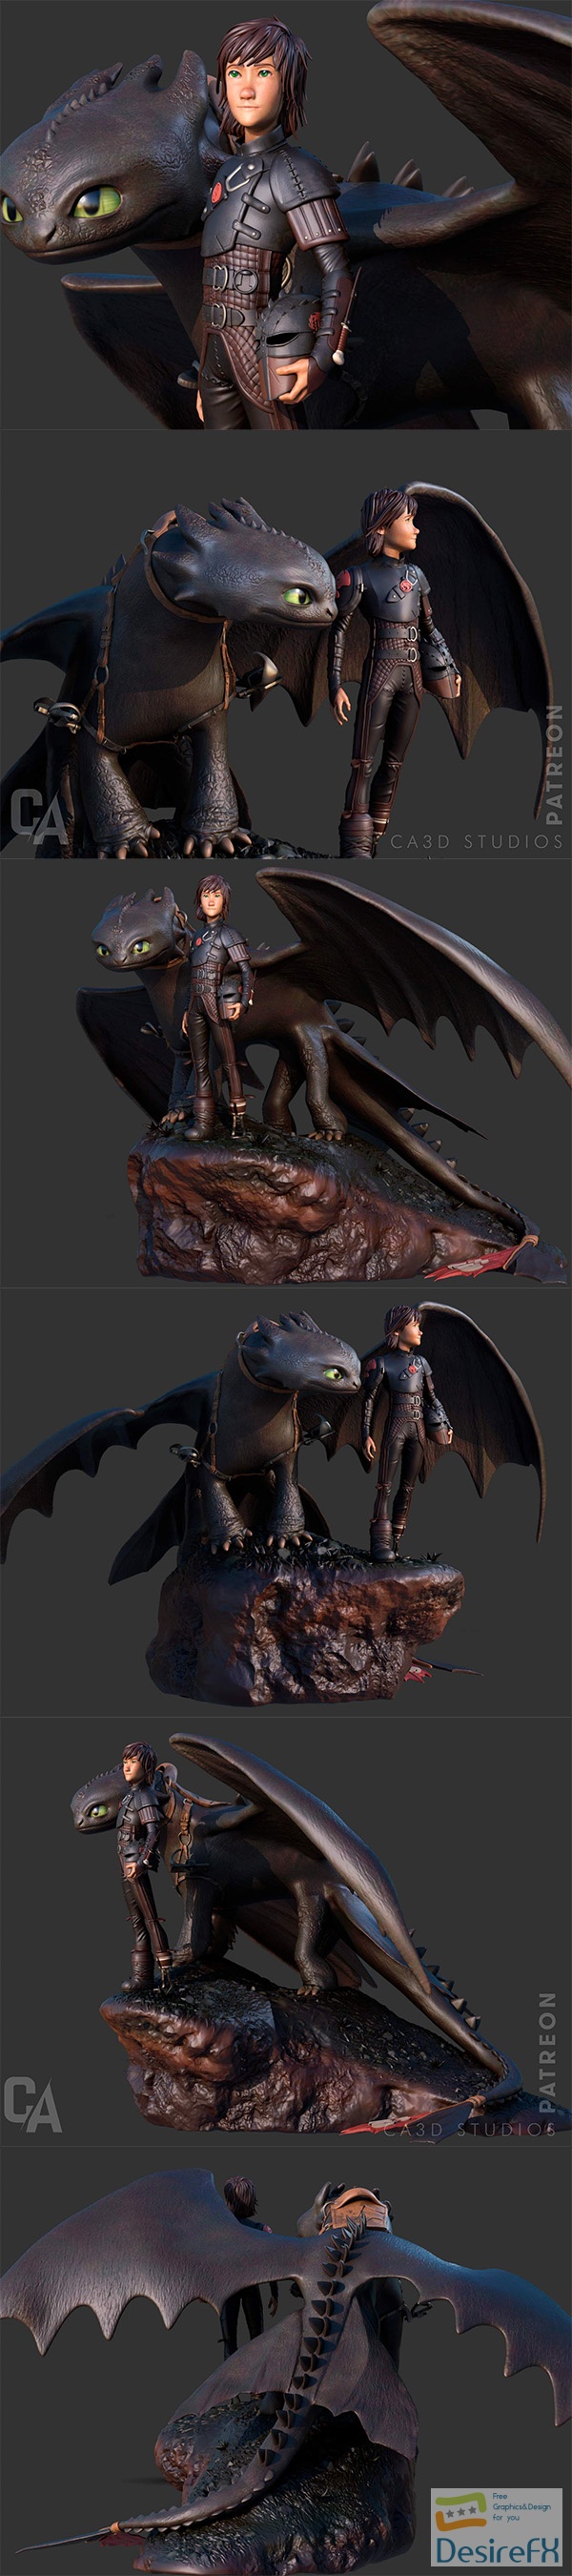 Ca 3d Studios – Toothless Hiccup – 3D Print